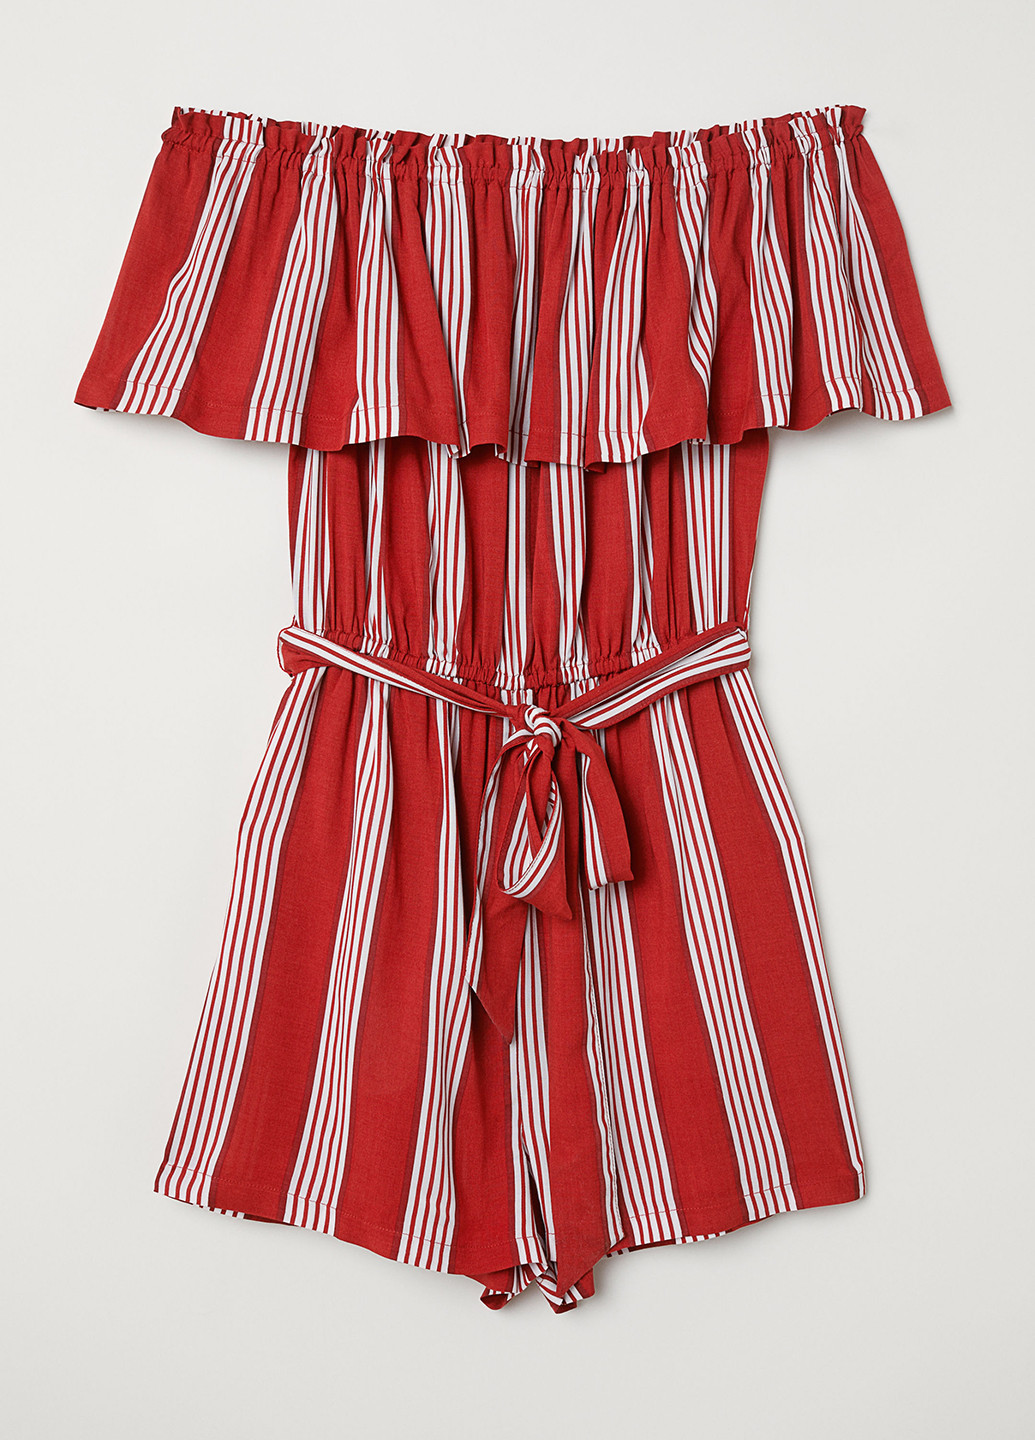 Комбинезон H&M комбинезон-шорты полоска красный кэжуал